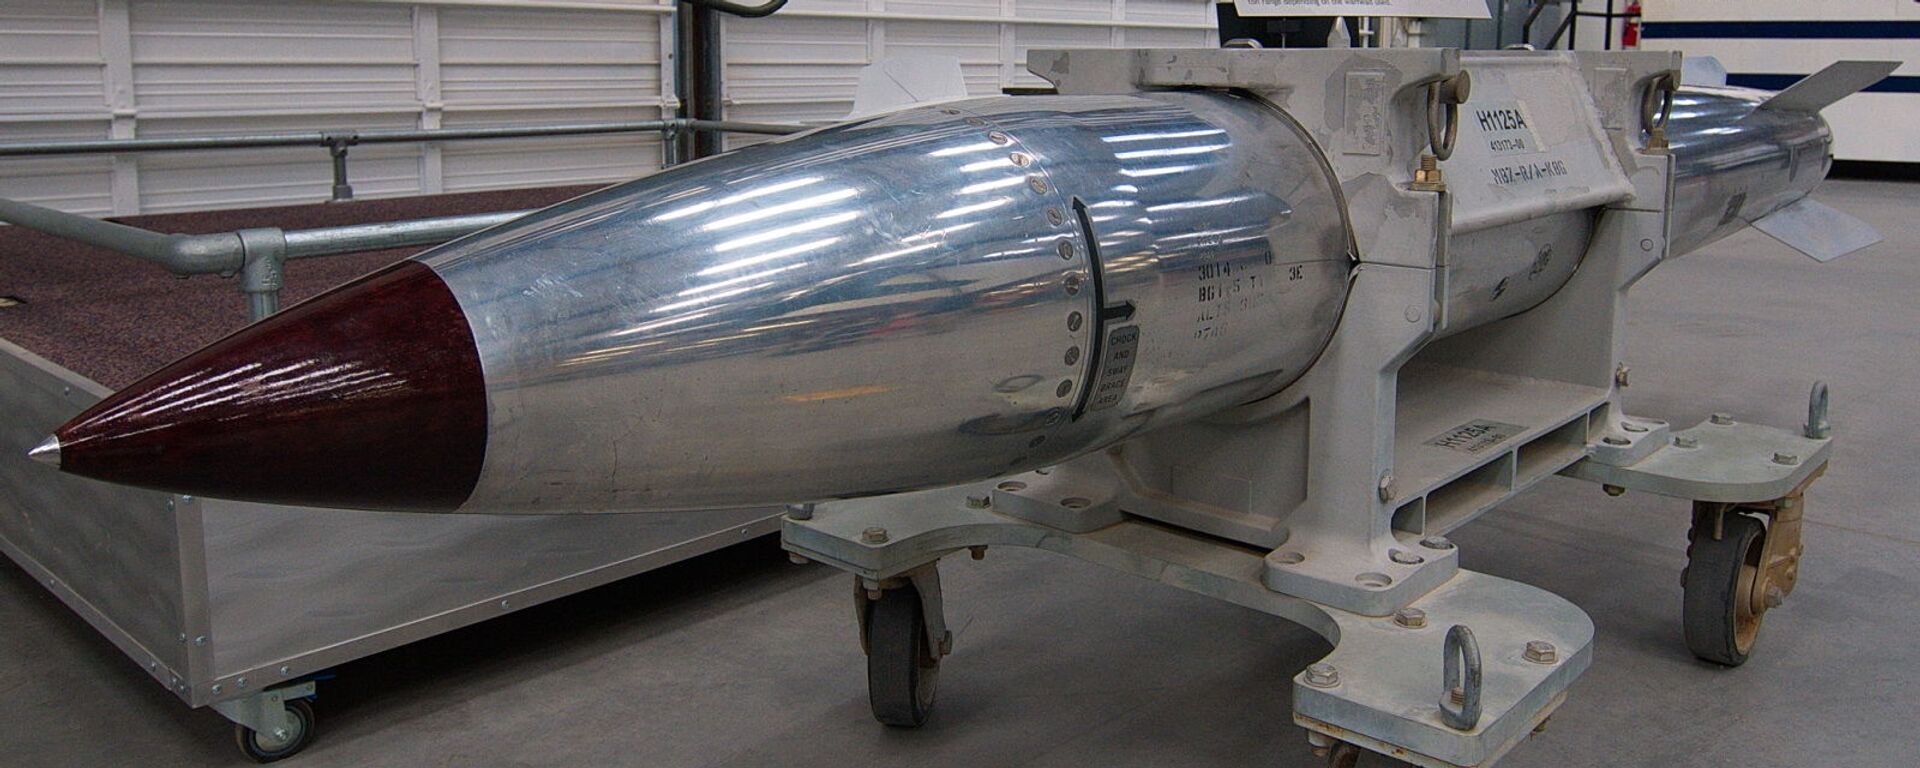 Б61 нуклеарна бомба - Sputnik Србија, 1920, 25.05.2021